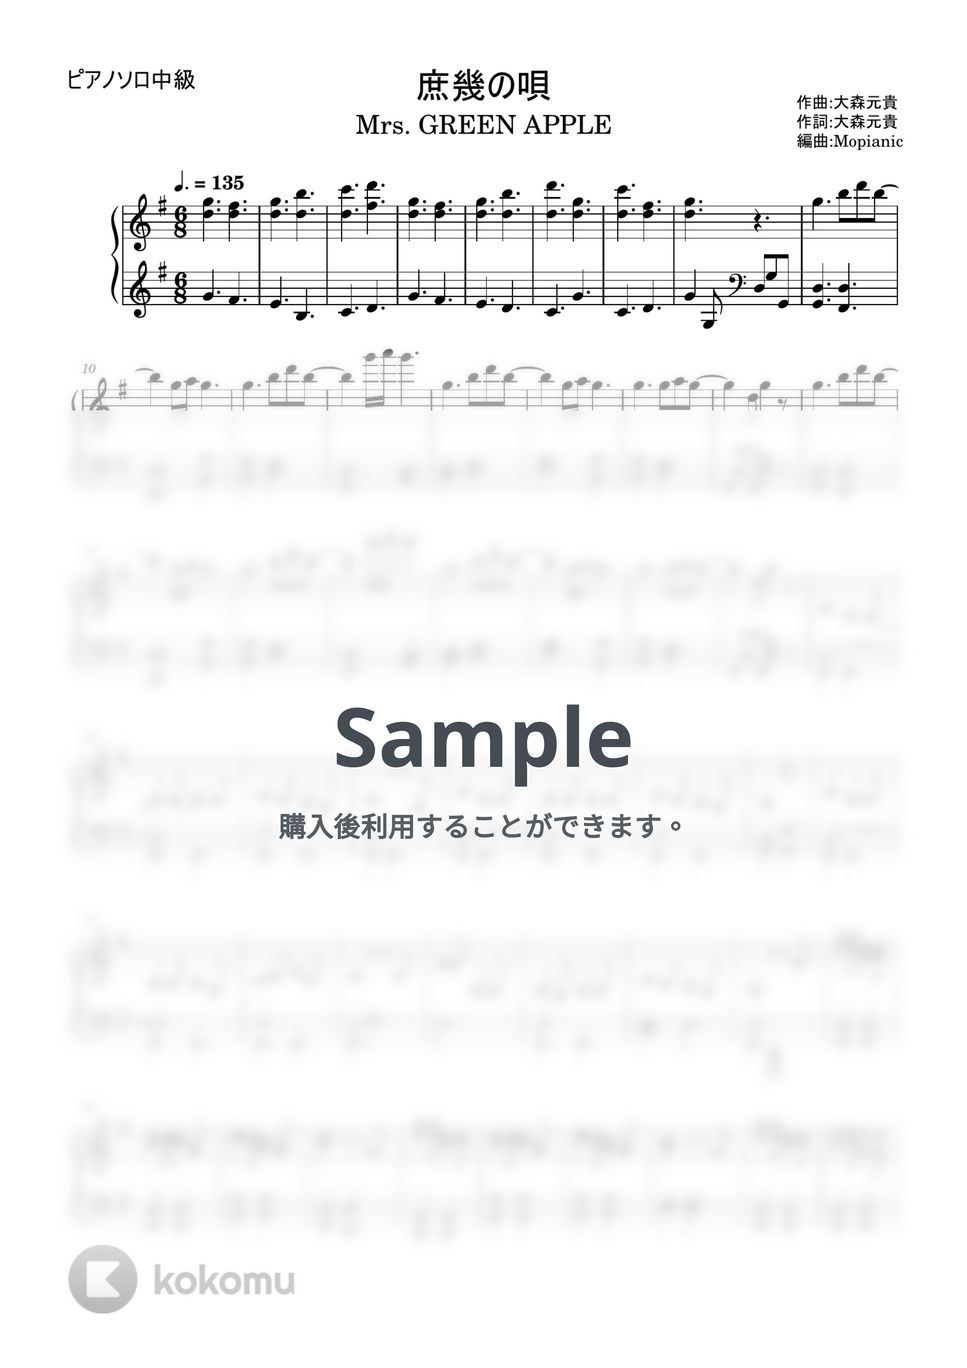 Mrs. GREEN APPLE - Shoki no Uta (intermediate, piano) by Mopianic